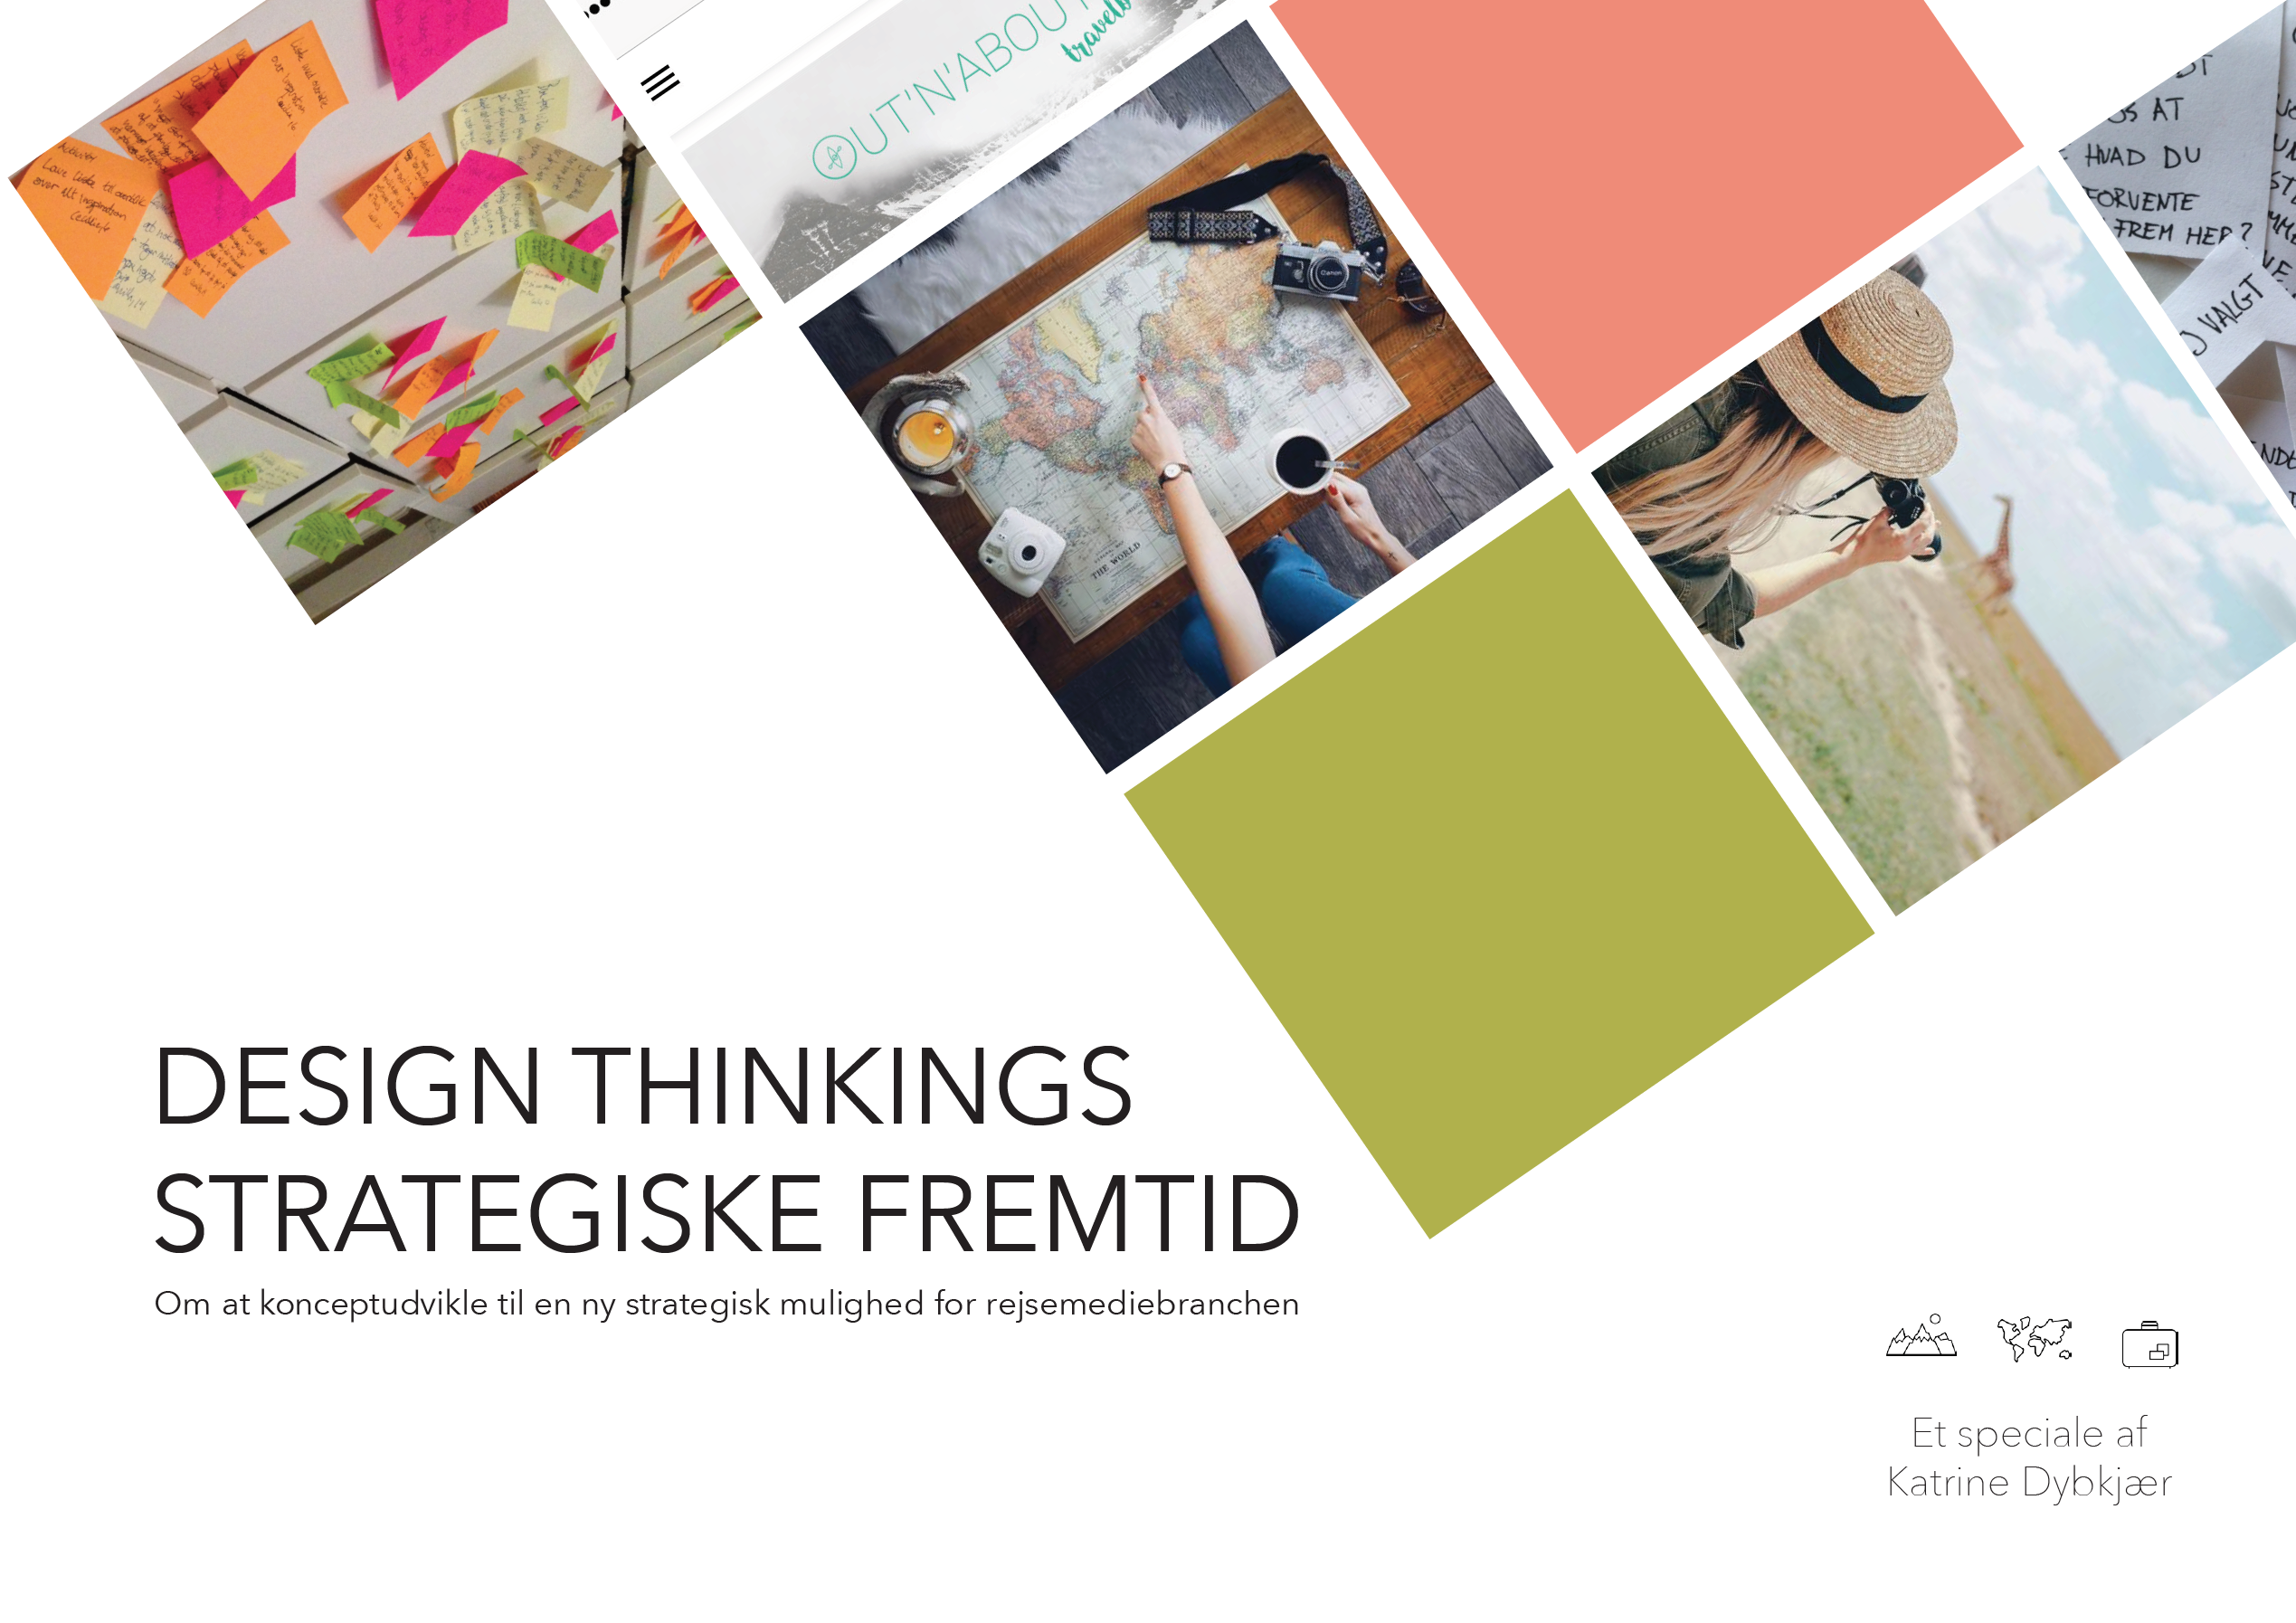 speciale_design_thinking_katrine_dybkjaer